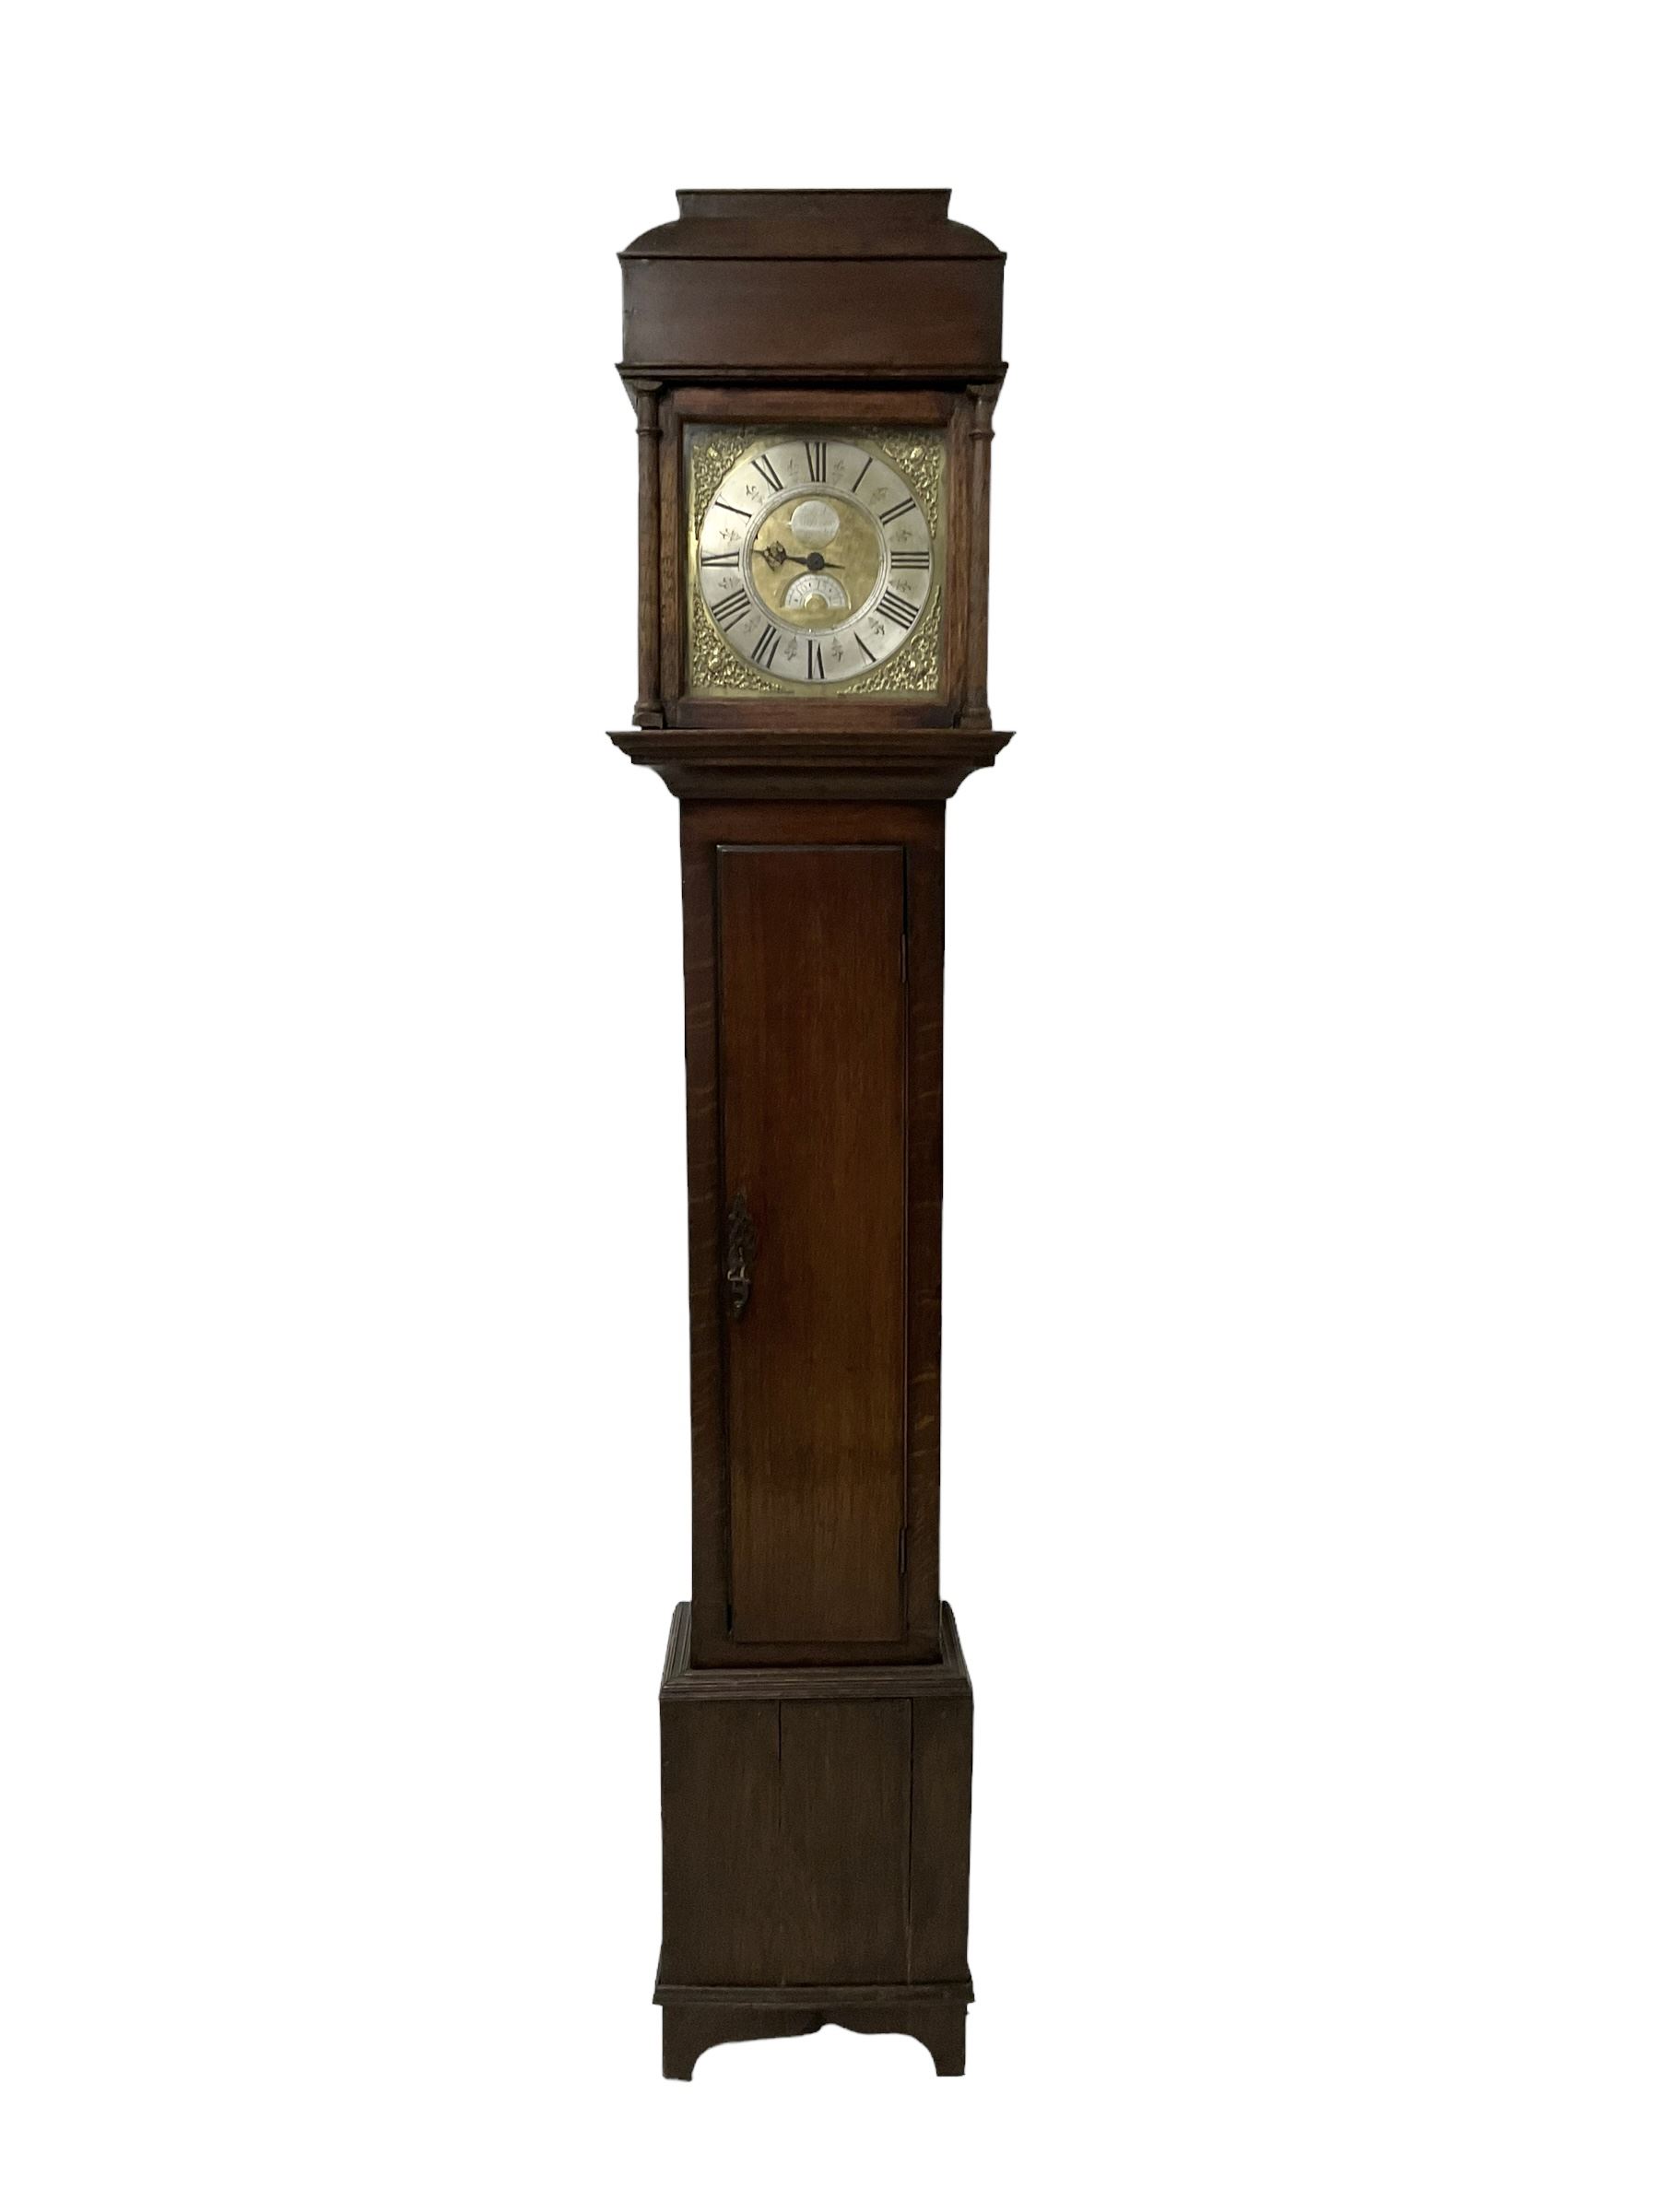 Robert Parkinson of Lancaster - an early George II oak cased 30 hr longcase clock - Image 3 of 7